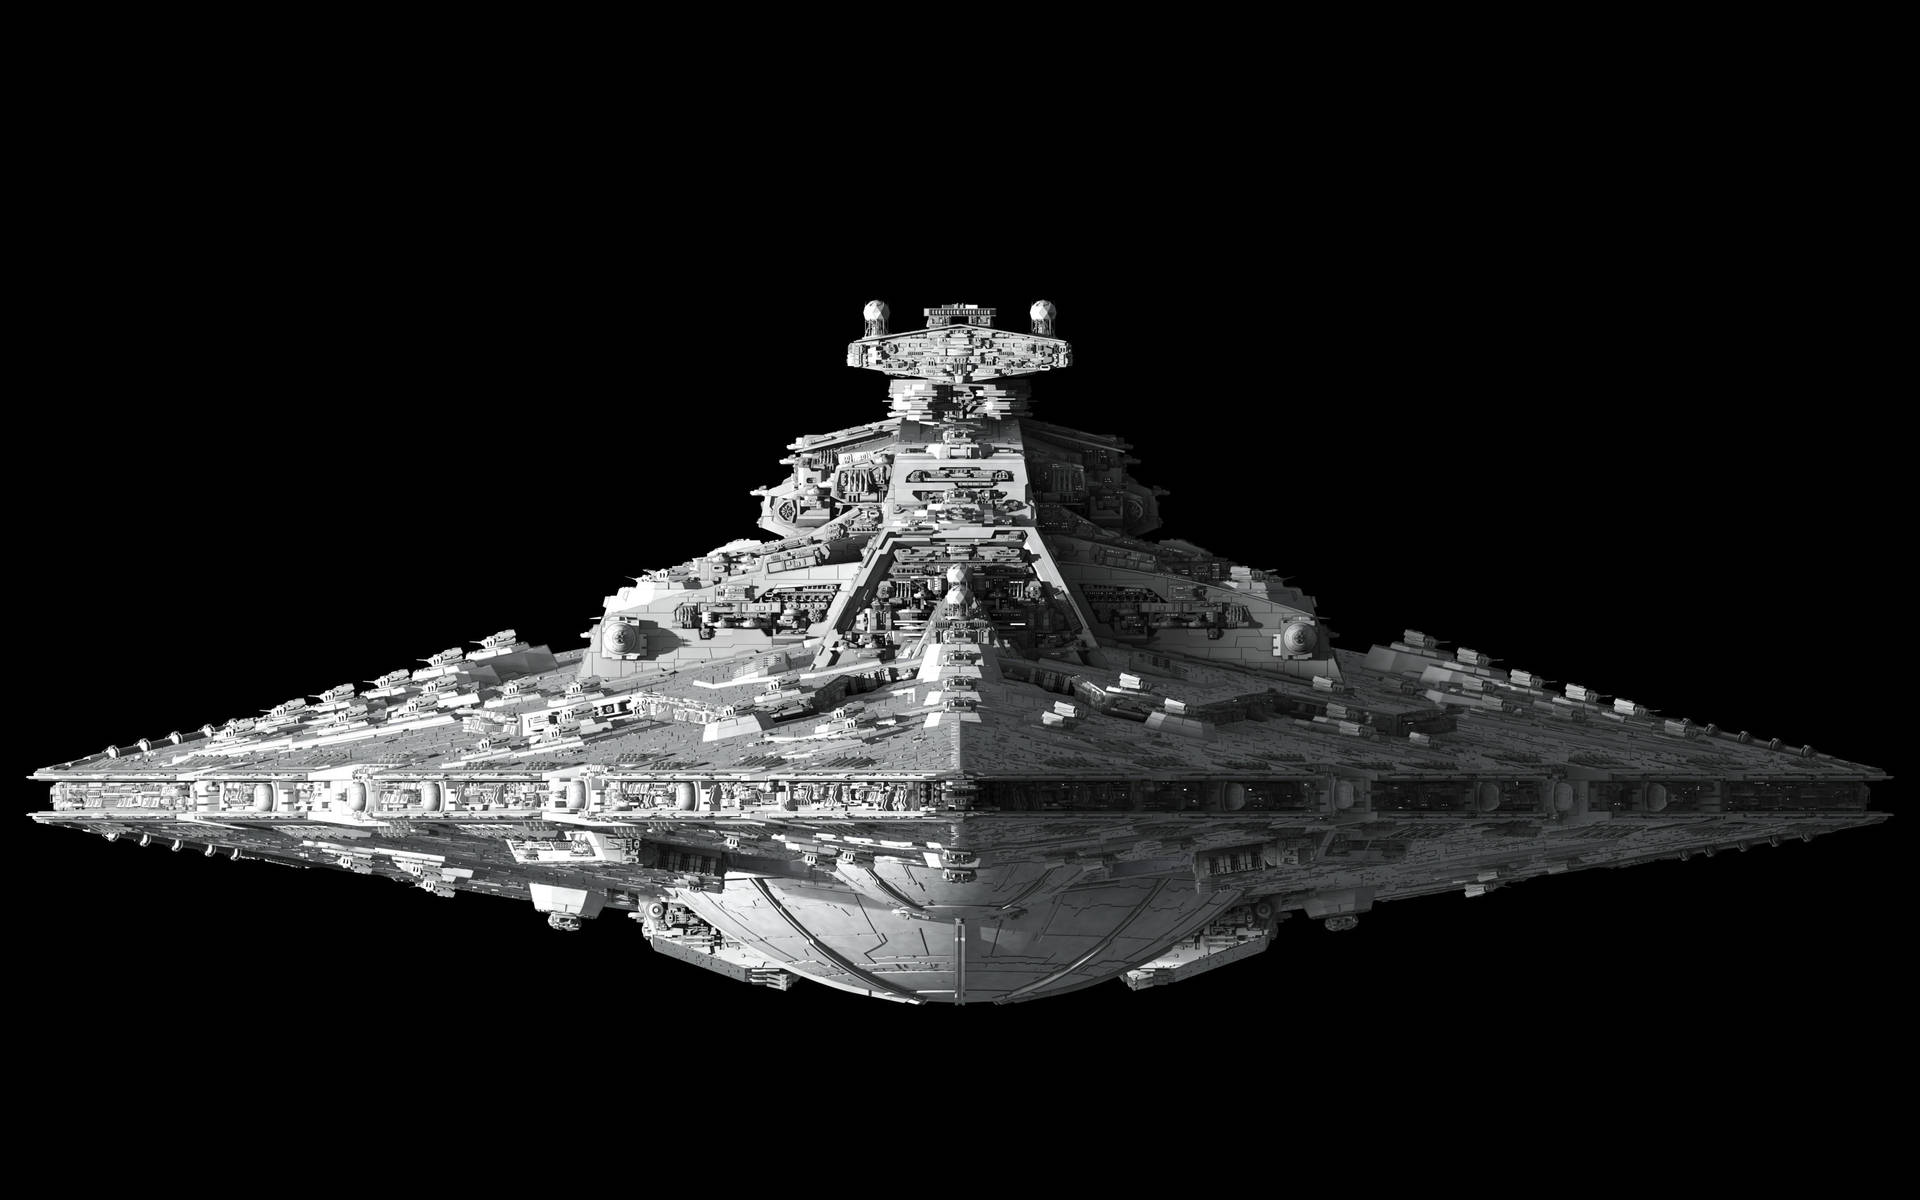 4k Star Wars Imperial Star Destroyer Background